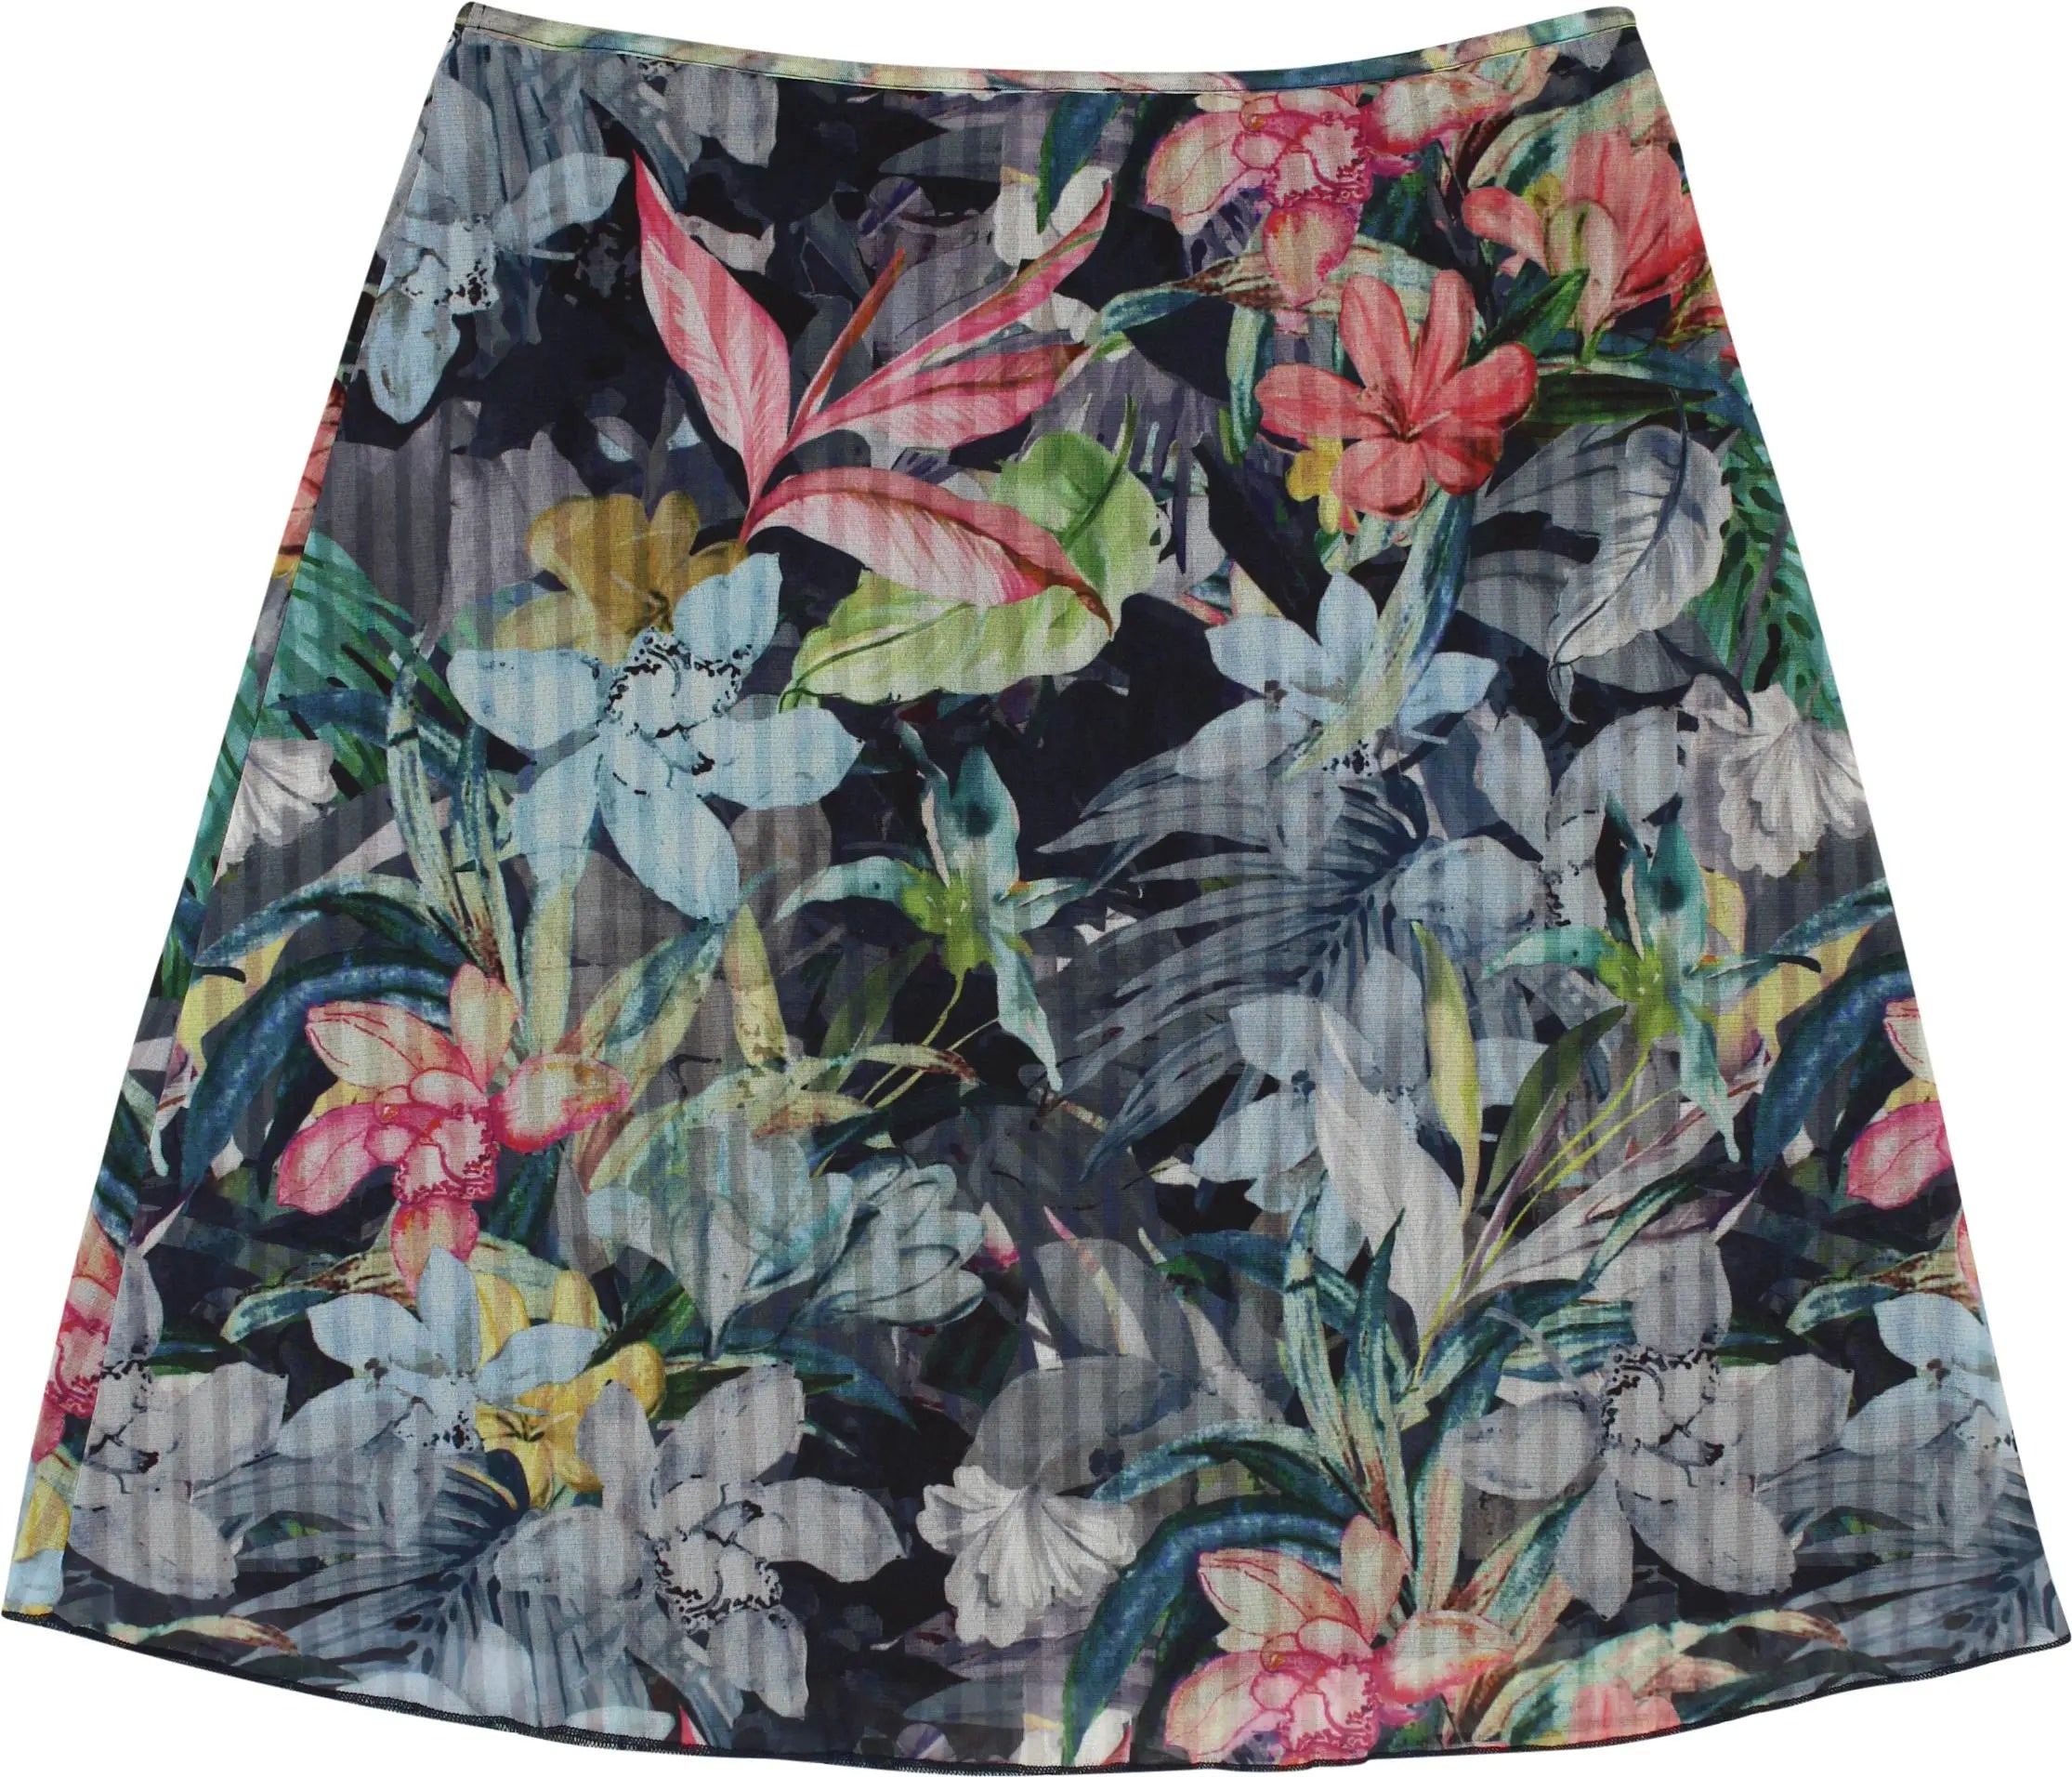 Bonita - Skirt- ThriftTale.com - Vintage and second handclothing